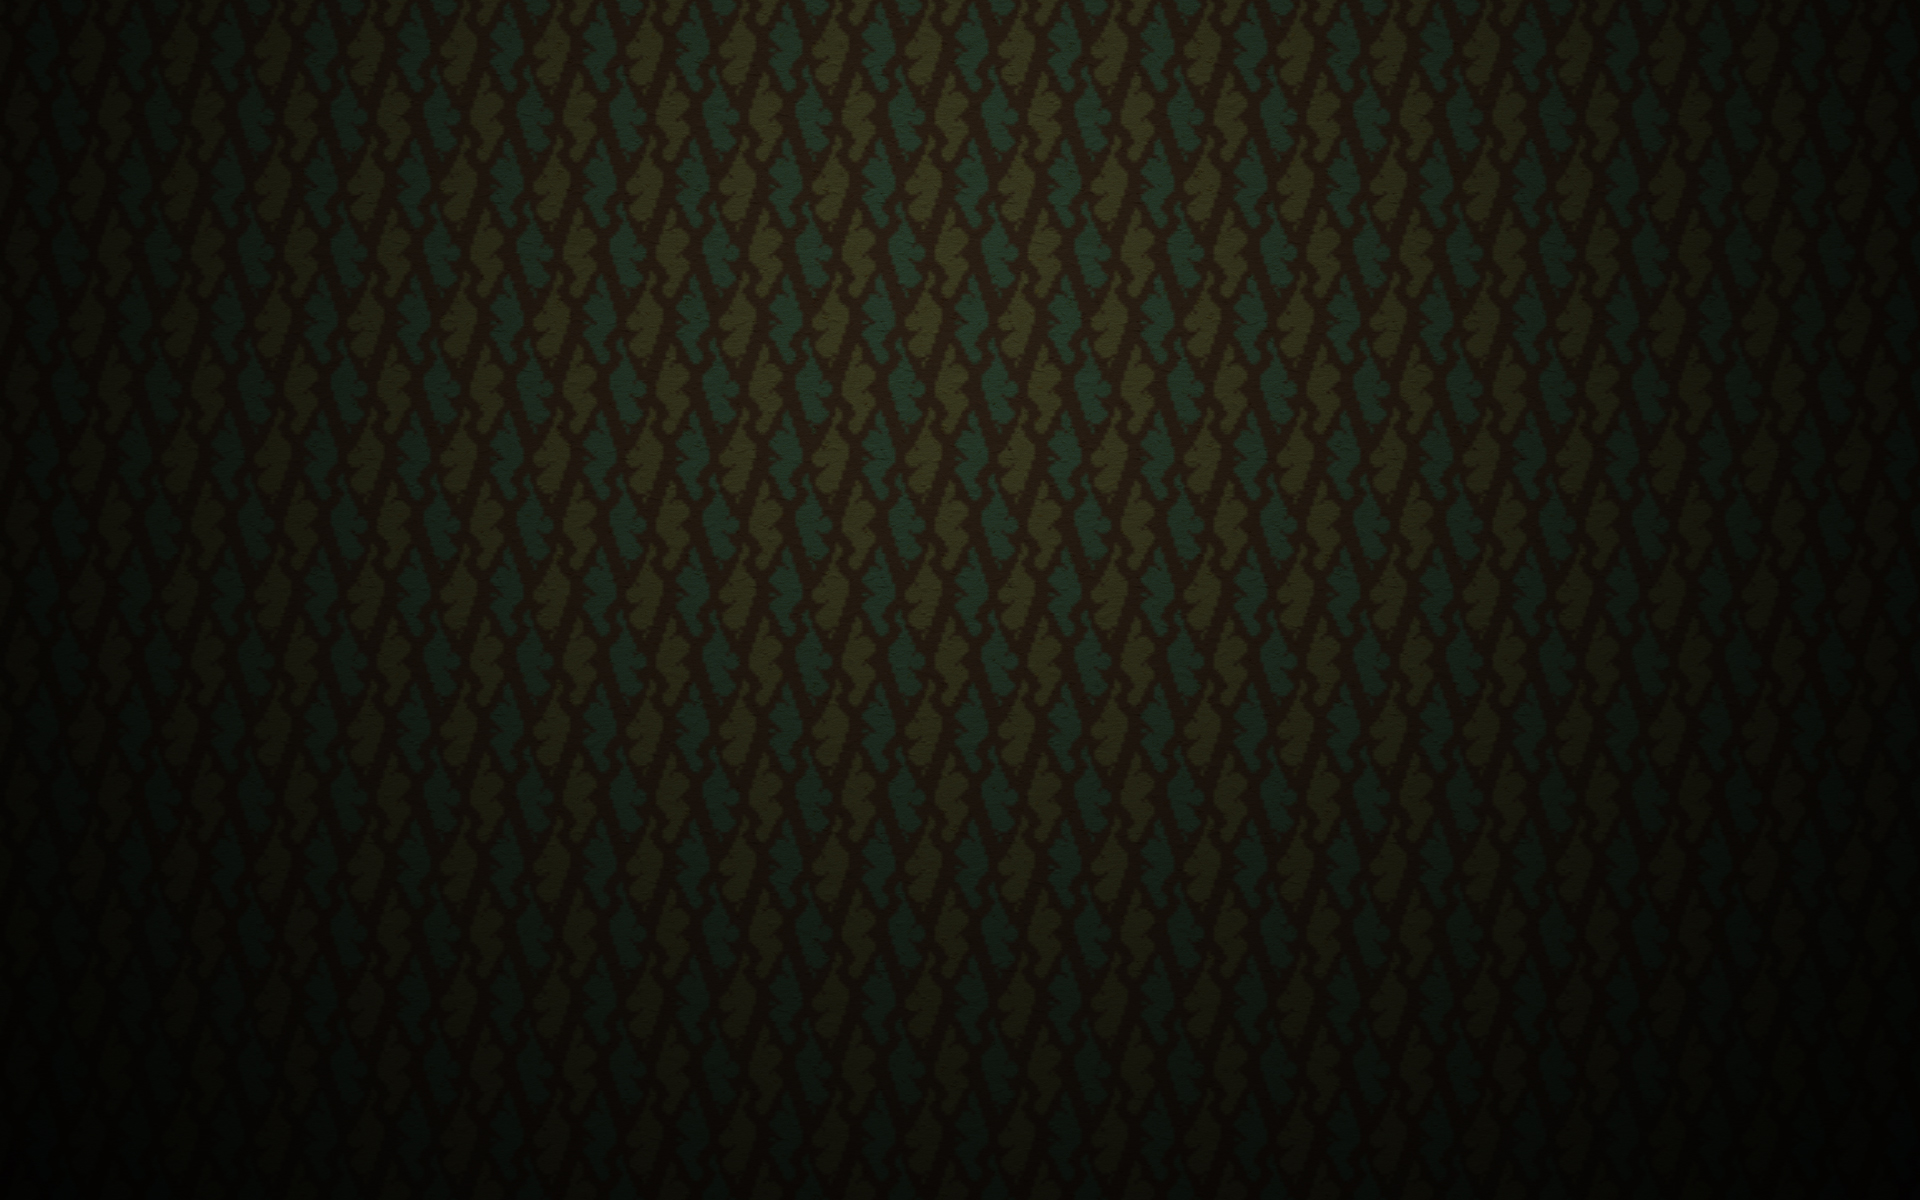 Dark Patterns Background - HD wallpapers